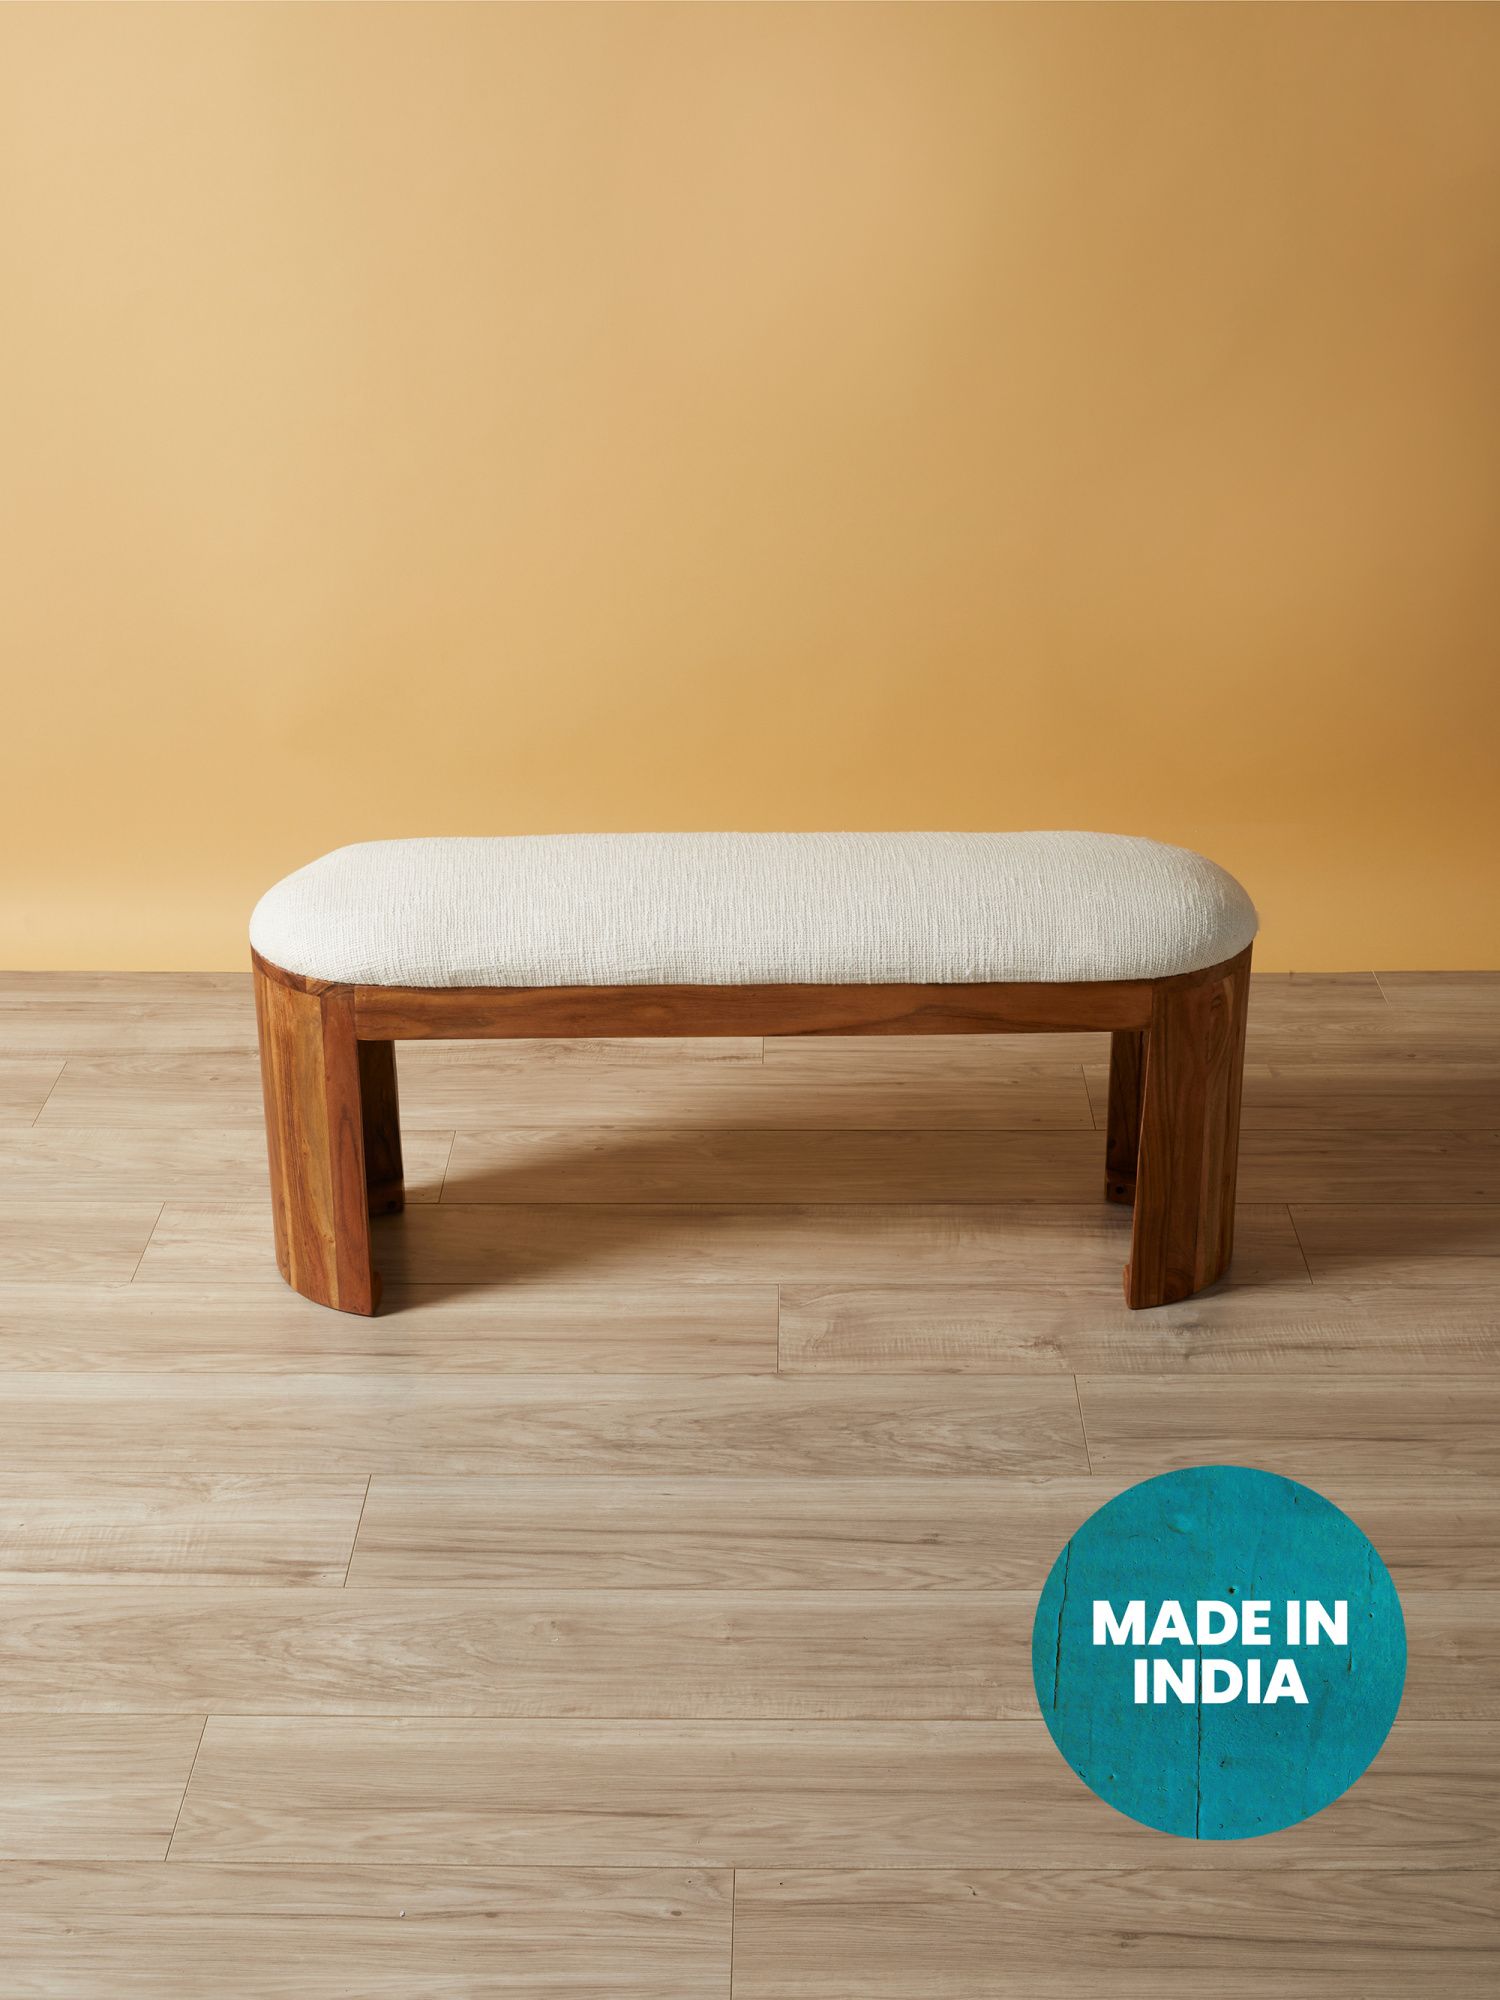 18x43 Wood Upholstered Bench | HomeGoods